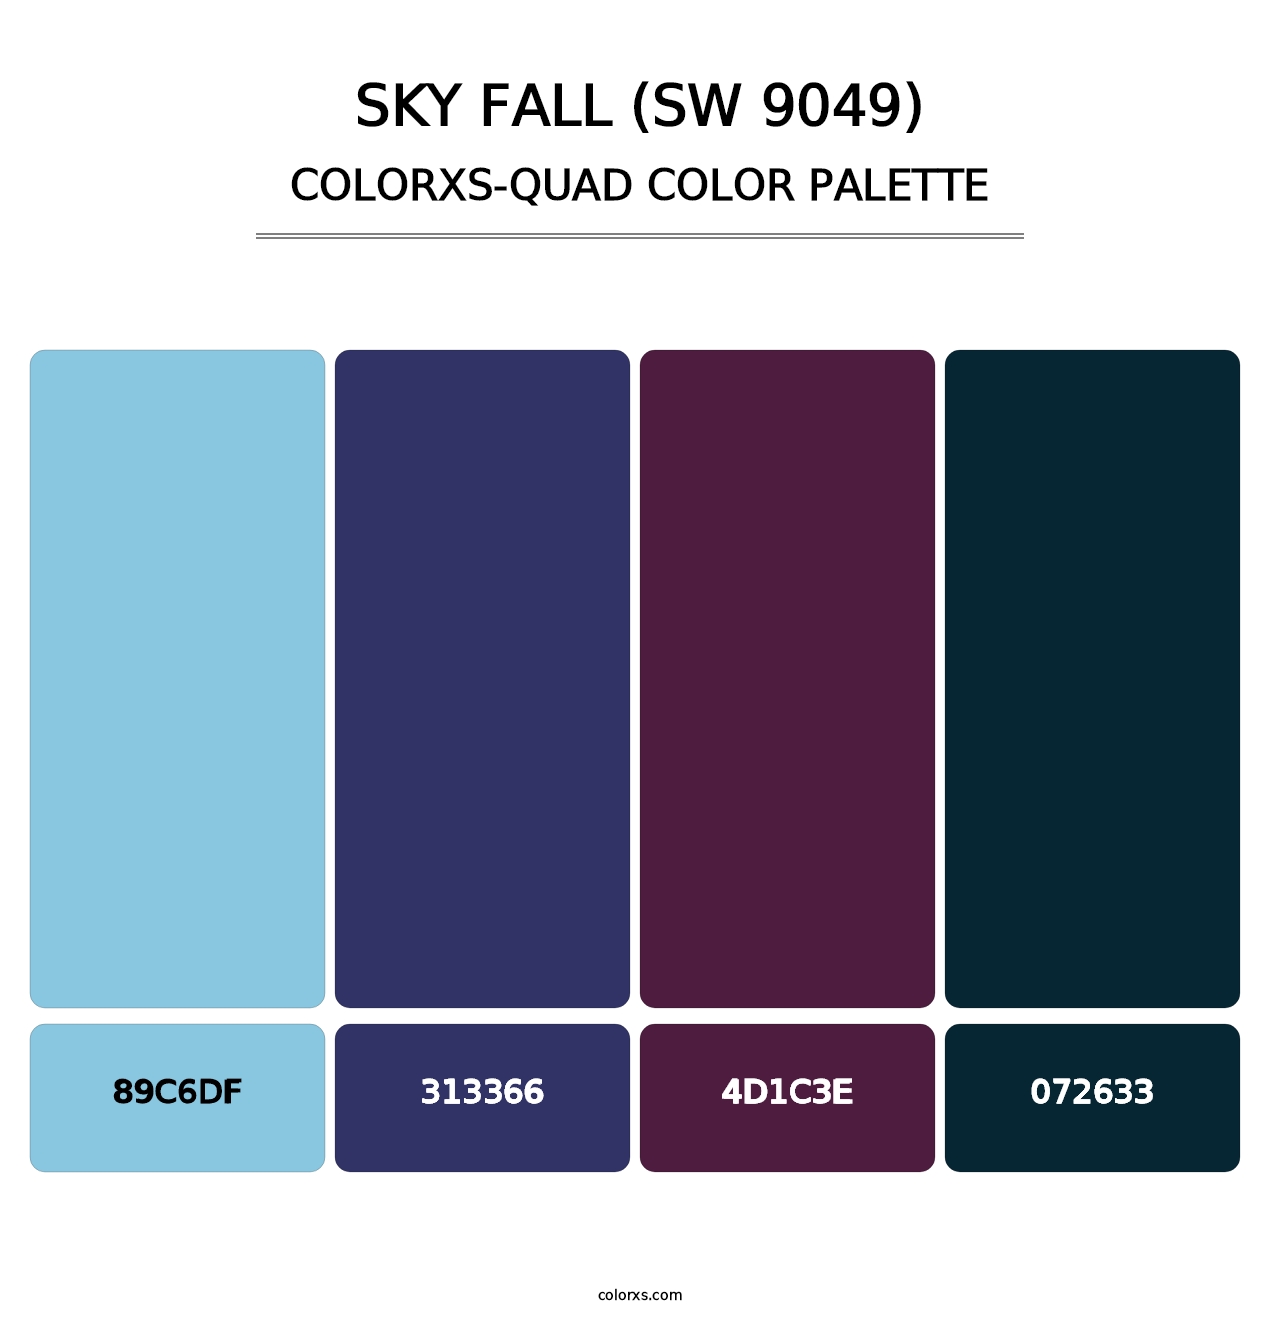 Sky Fall (SW 9049) - Colorxs Quad Palette